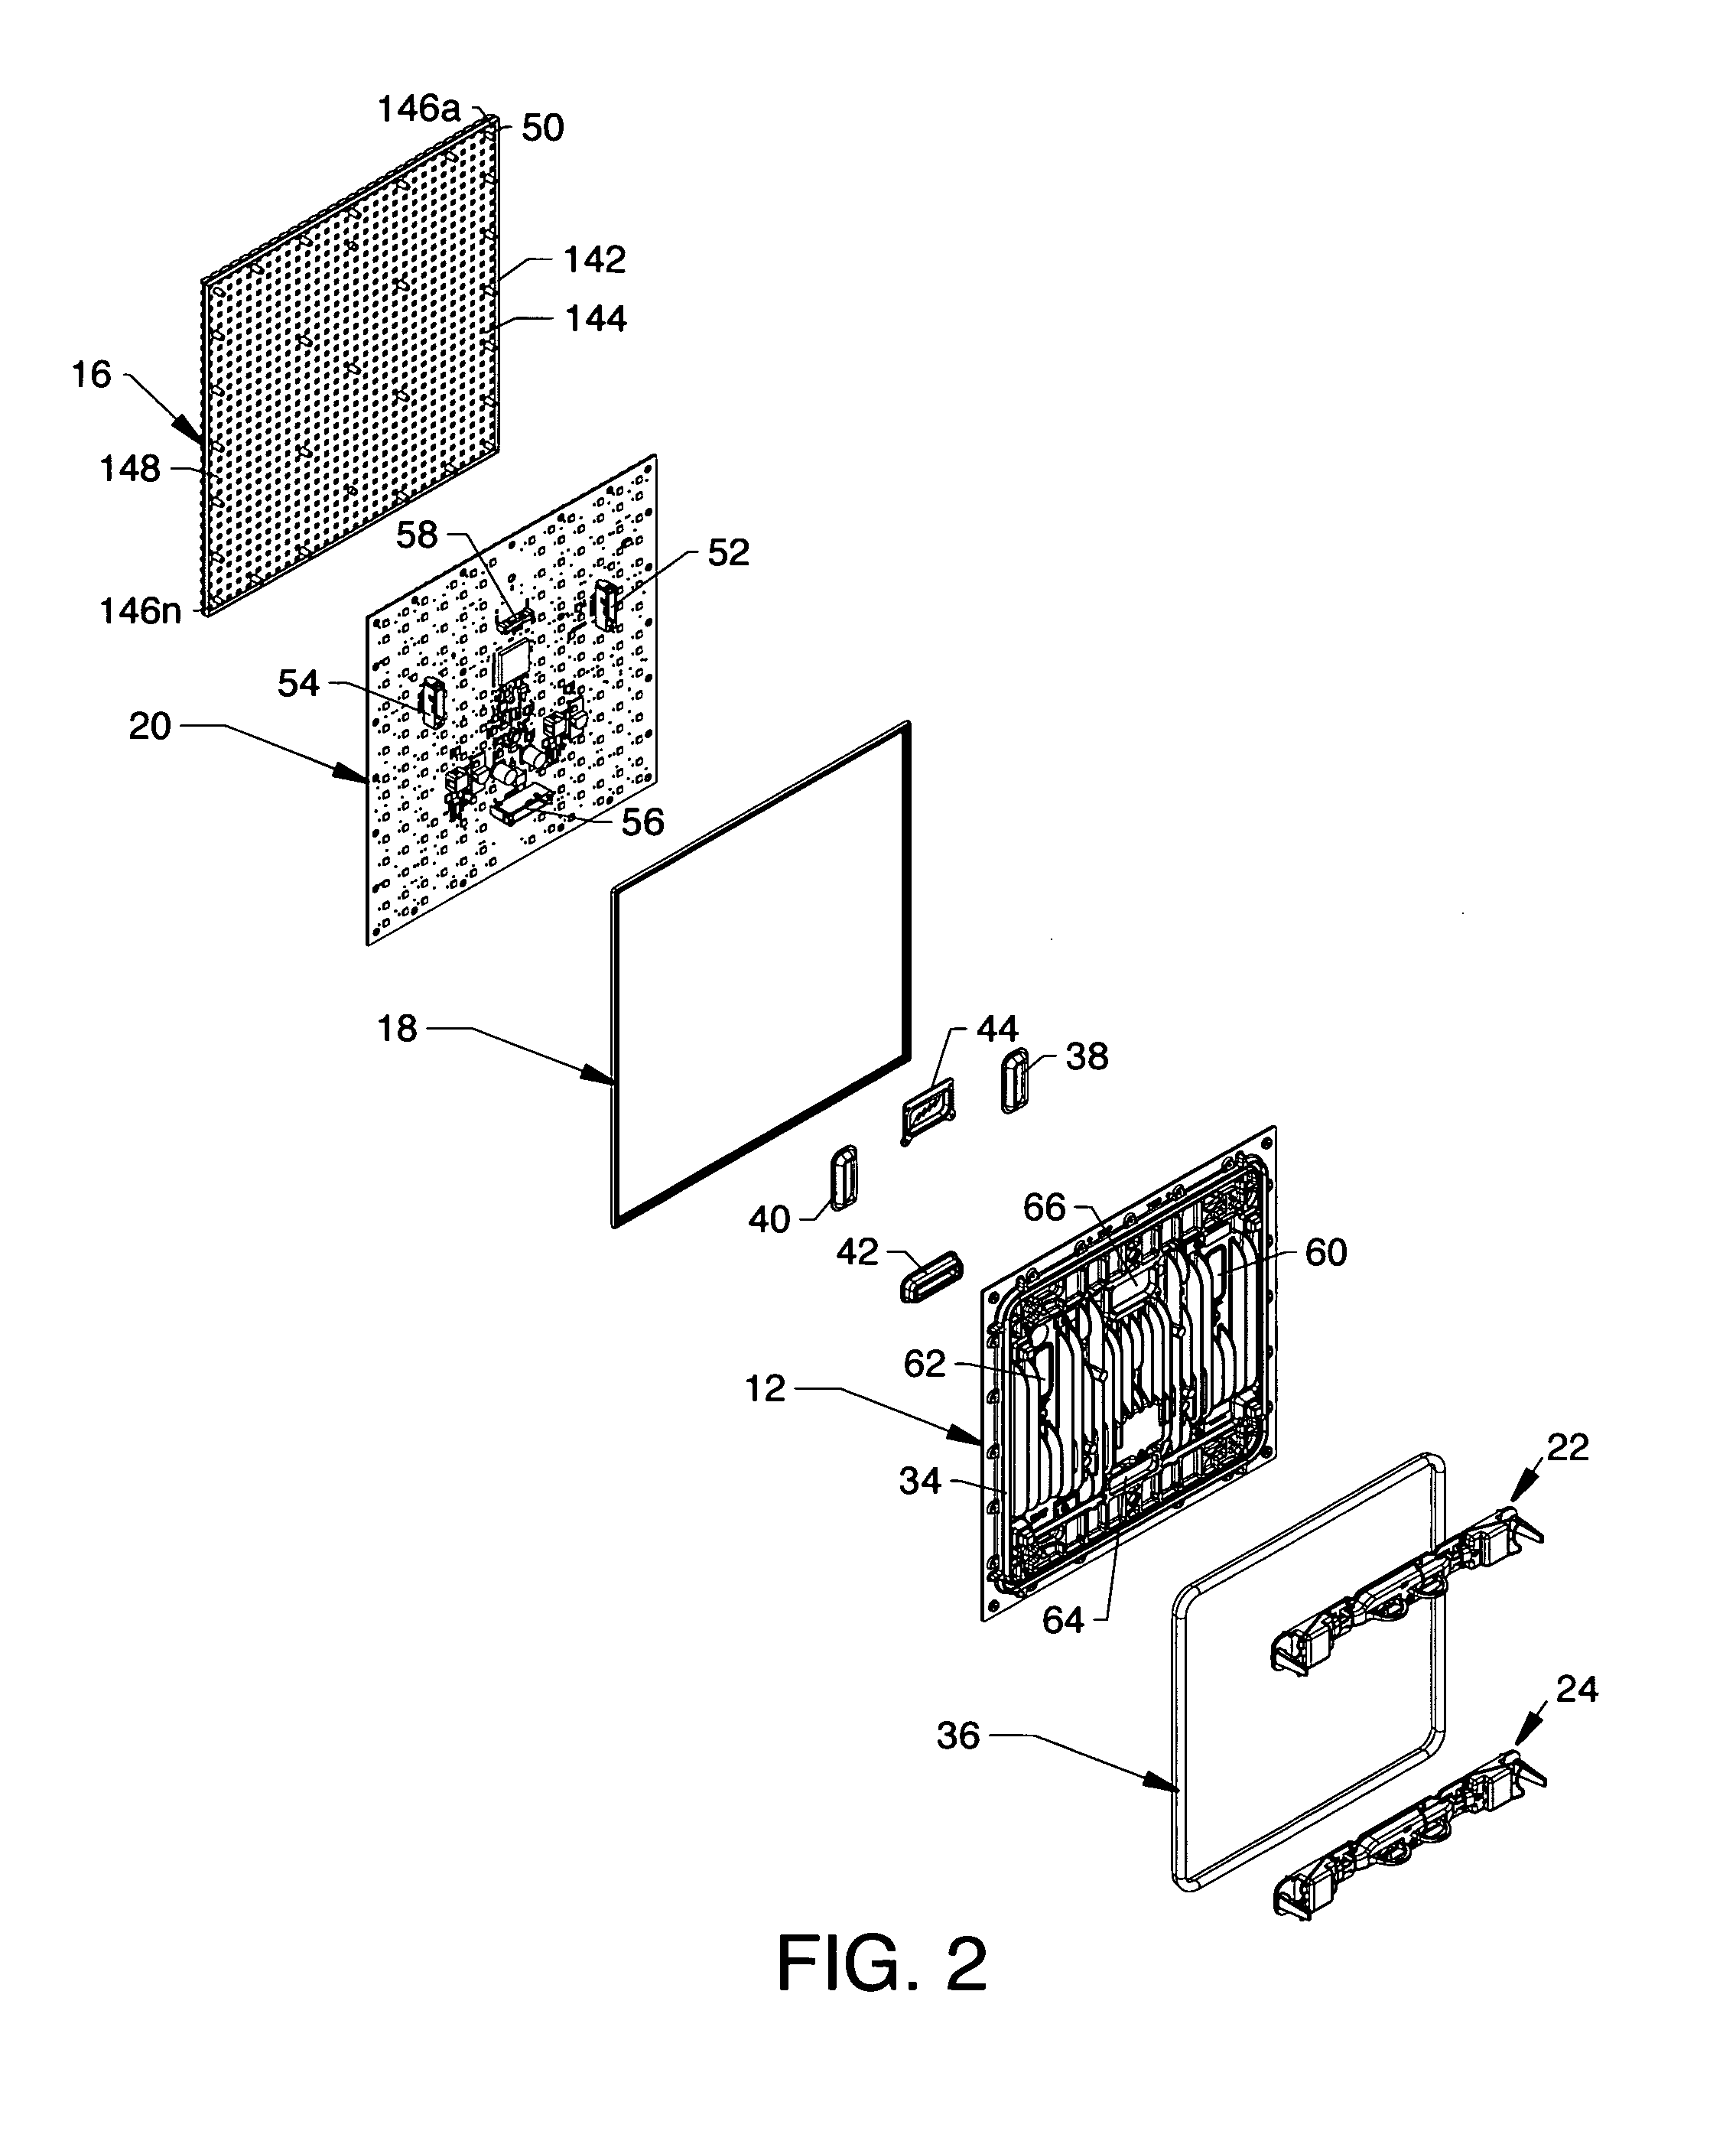 Multiple seal electronic display module having displacement springs